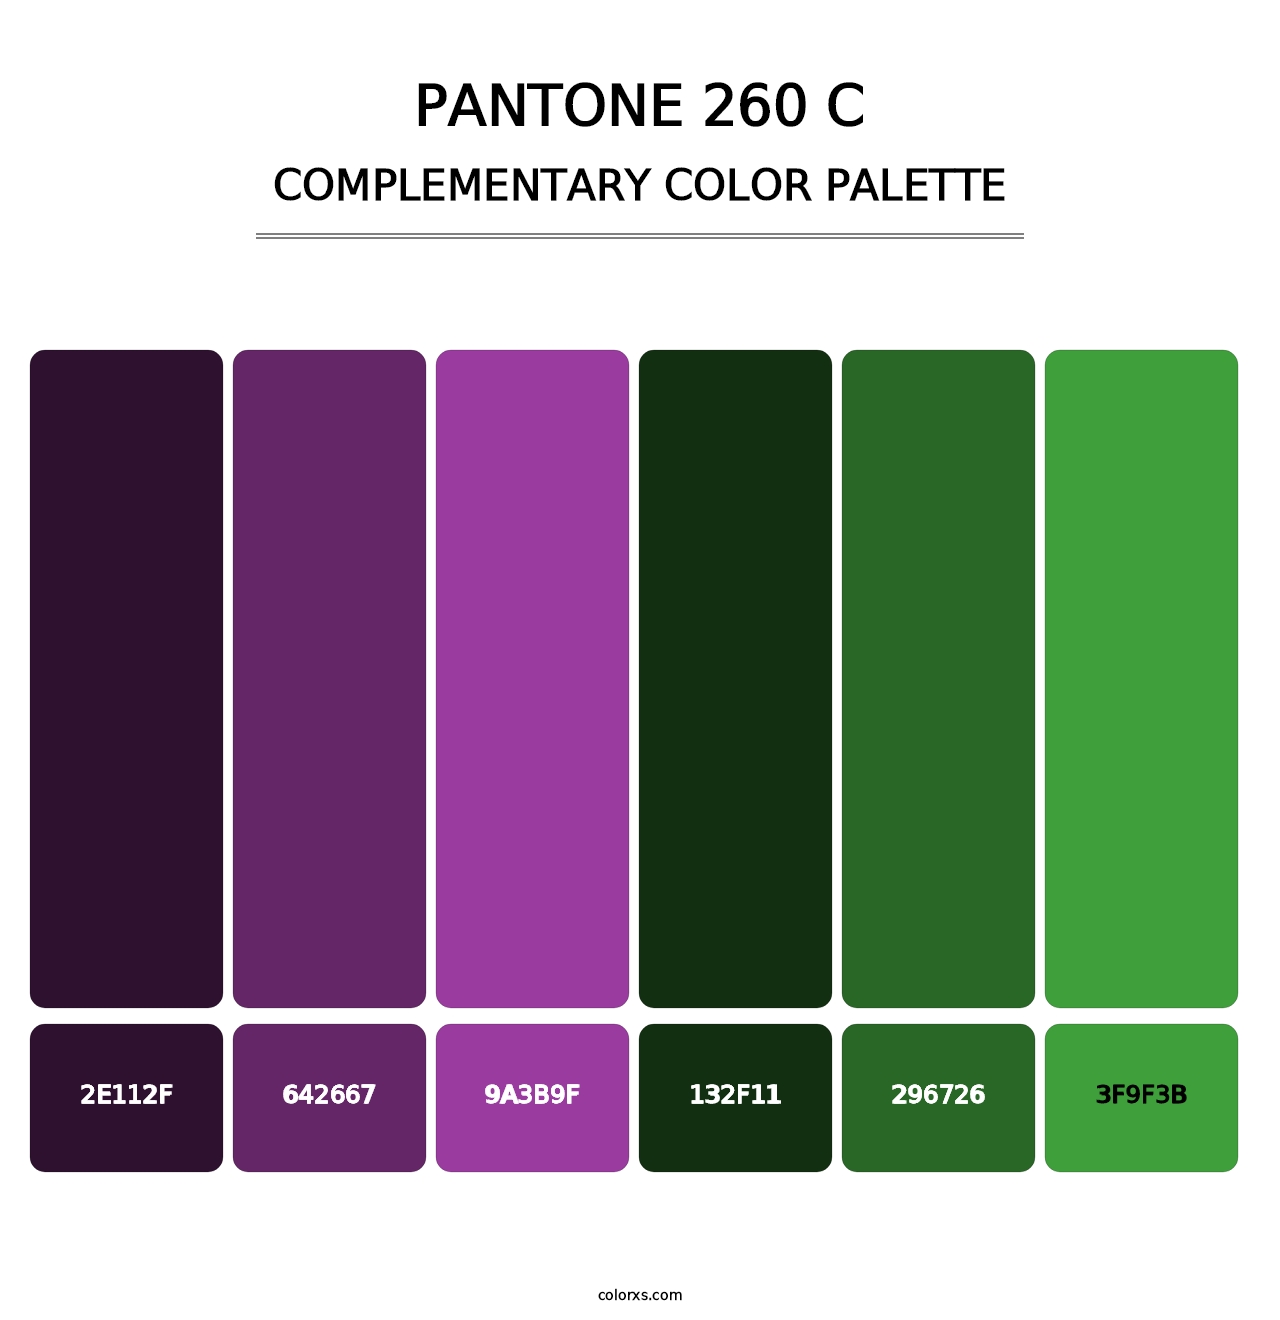 PANTONE 260 C - Complementary Color Palette